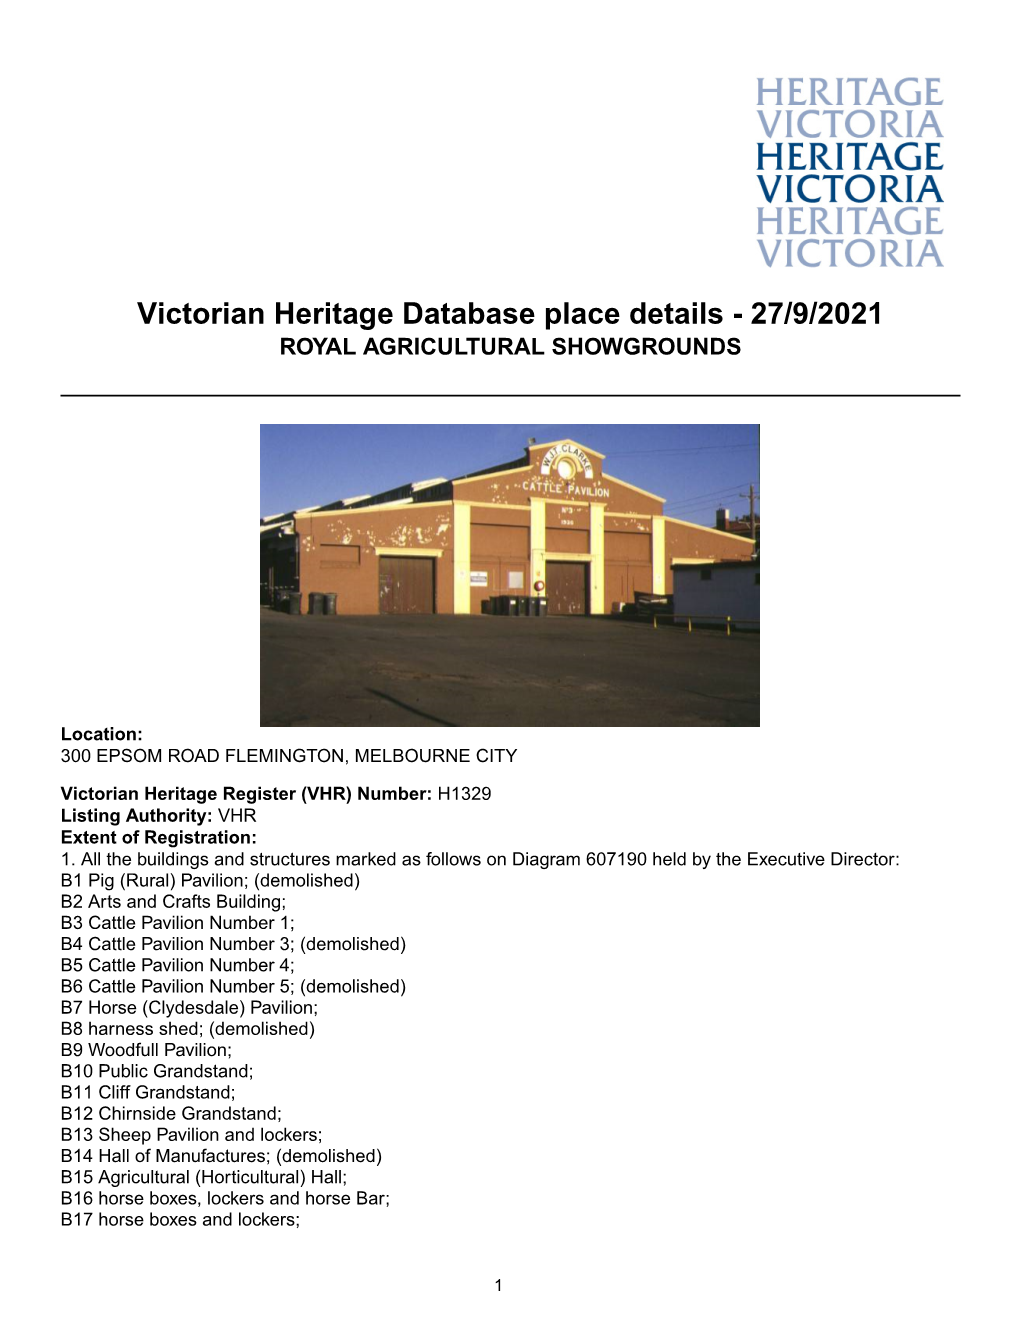 Victorian Heritage Database Place Details - 27/9/2021 ROYAL AGRICULTURAL SHOWGROUNDS